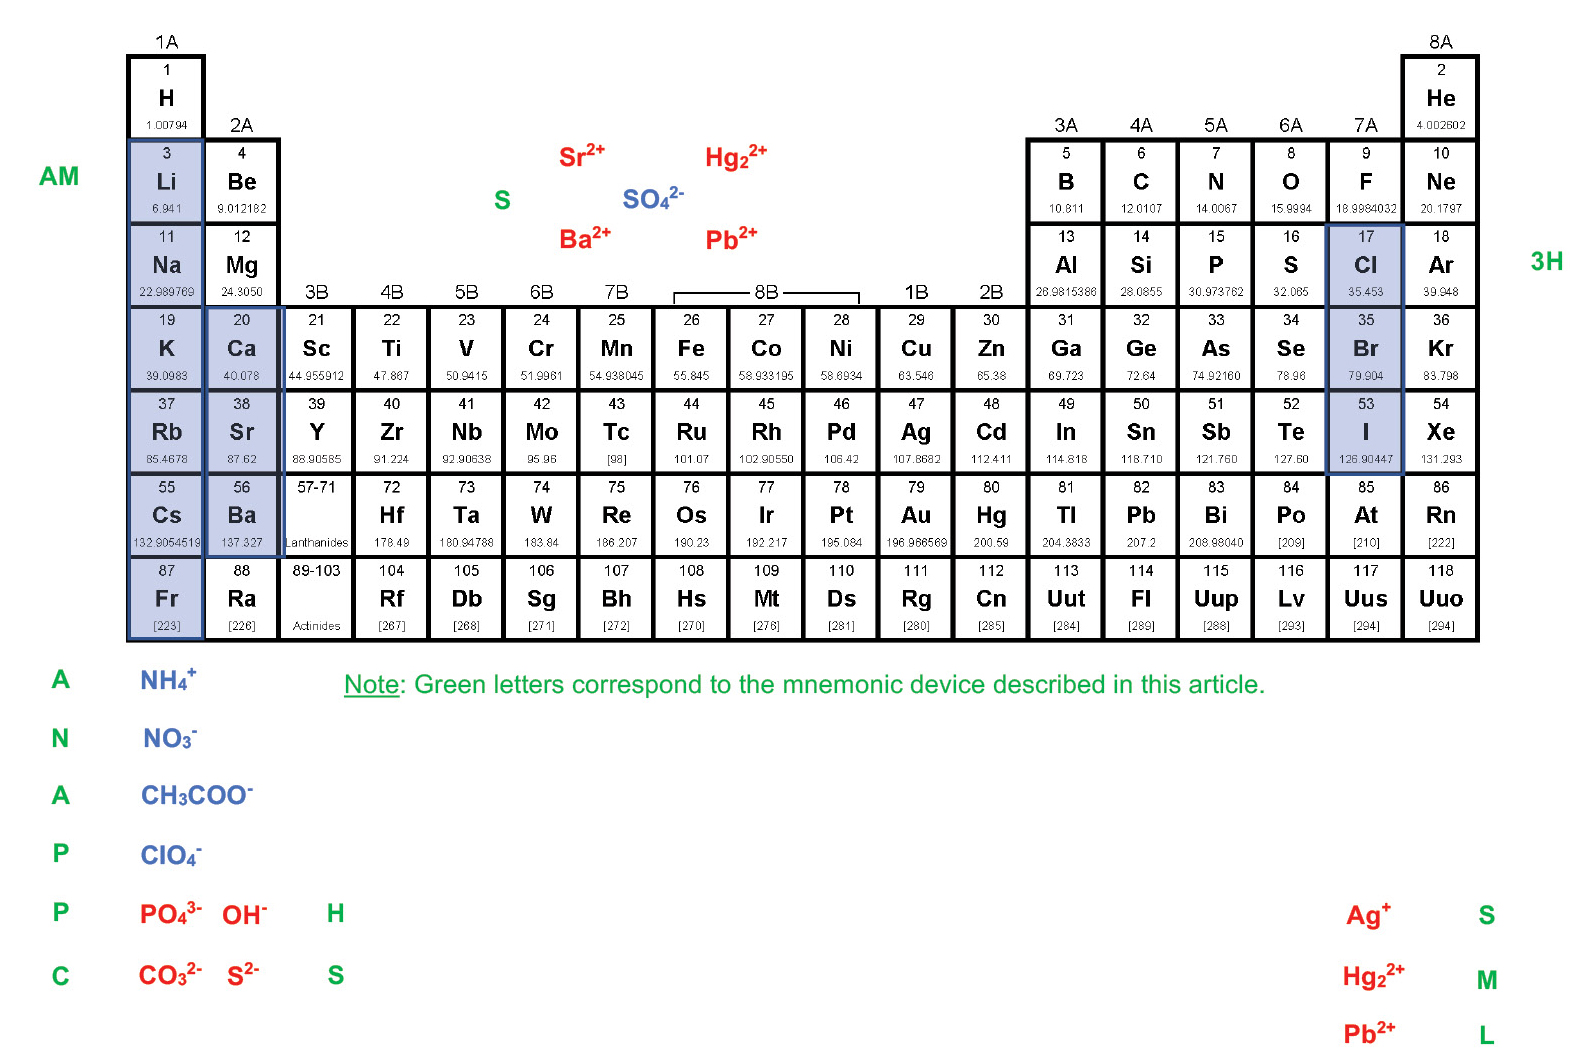 mercury solubility chart